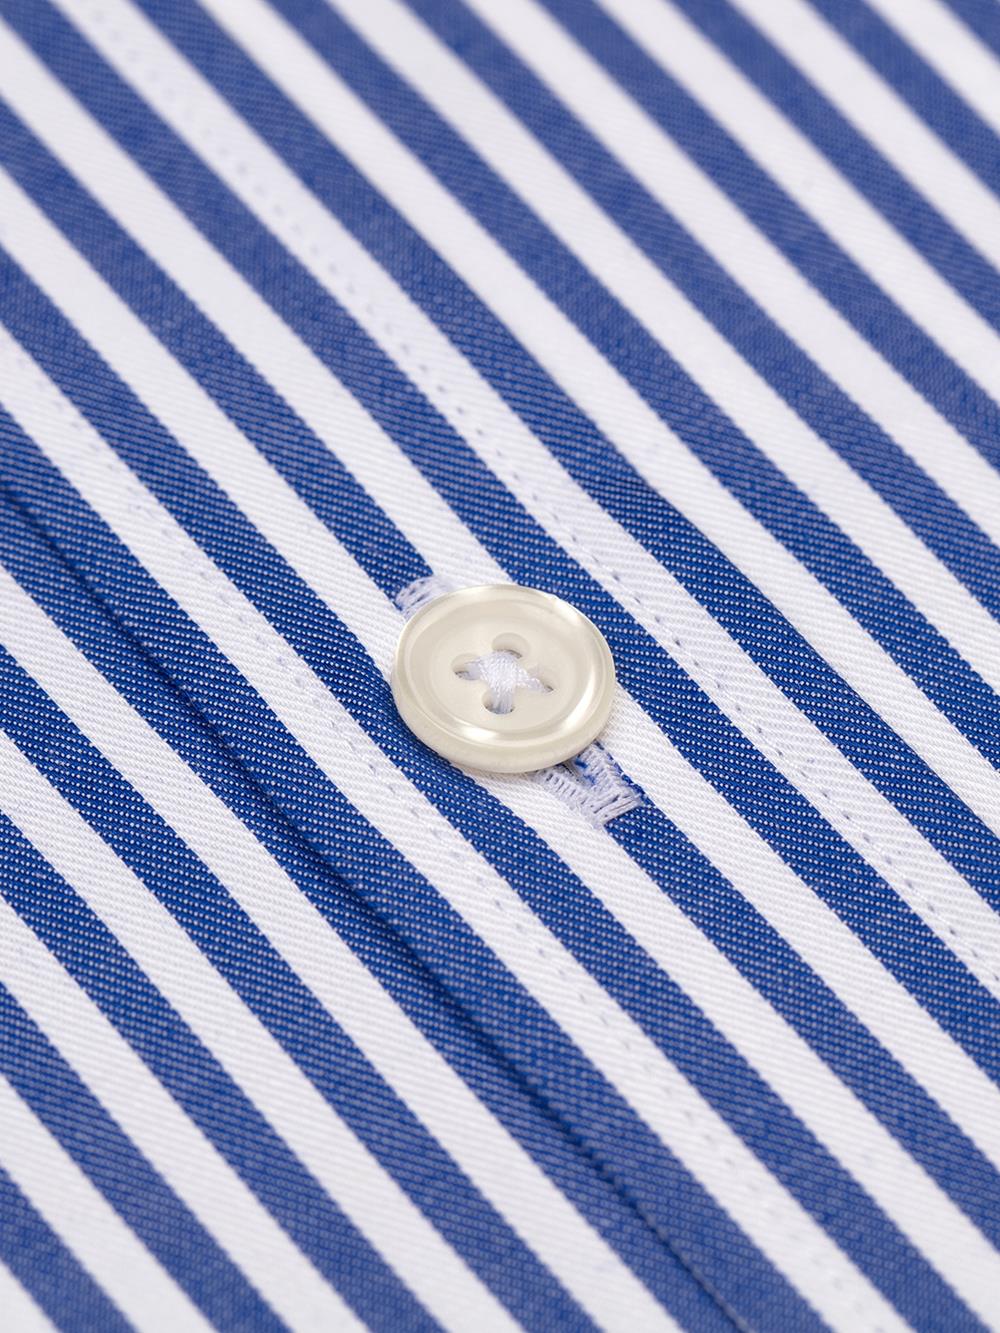 Nick navy blue striped shirt - Button-down collar